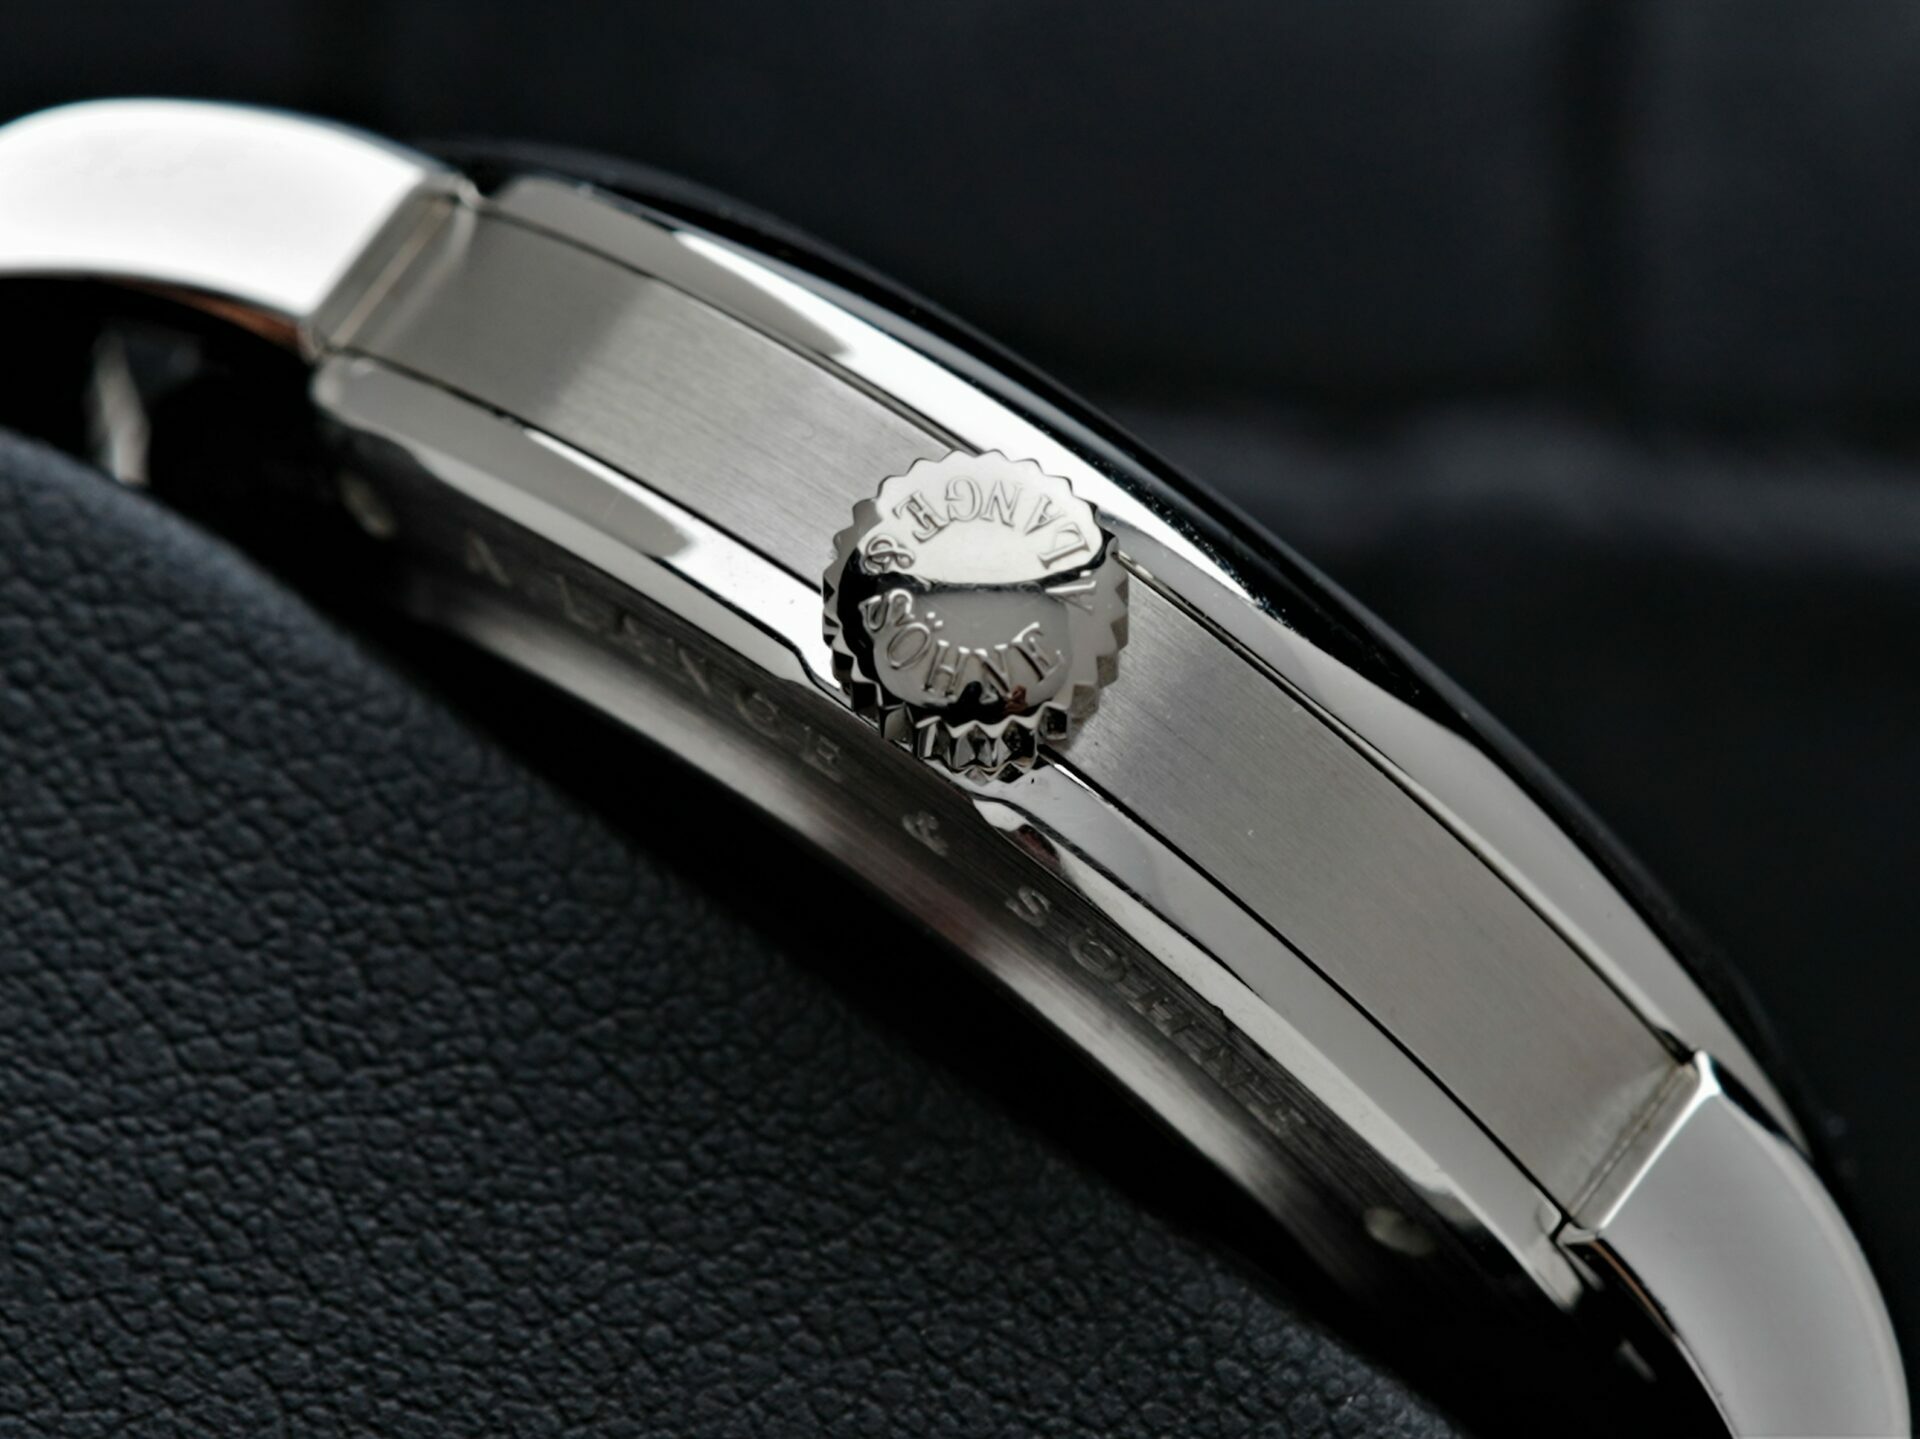 Side shot showing case and crown on the A. Lange & Söhne Richard Lange Platinum watch.